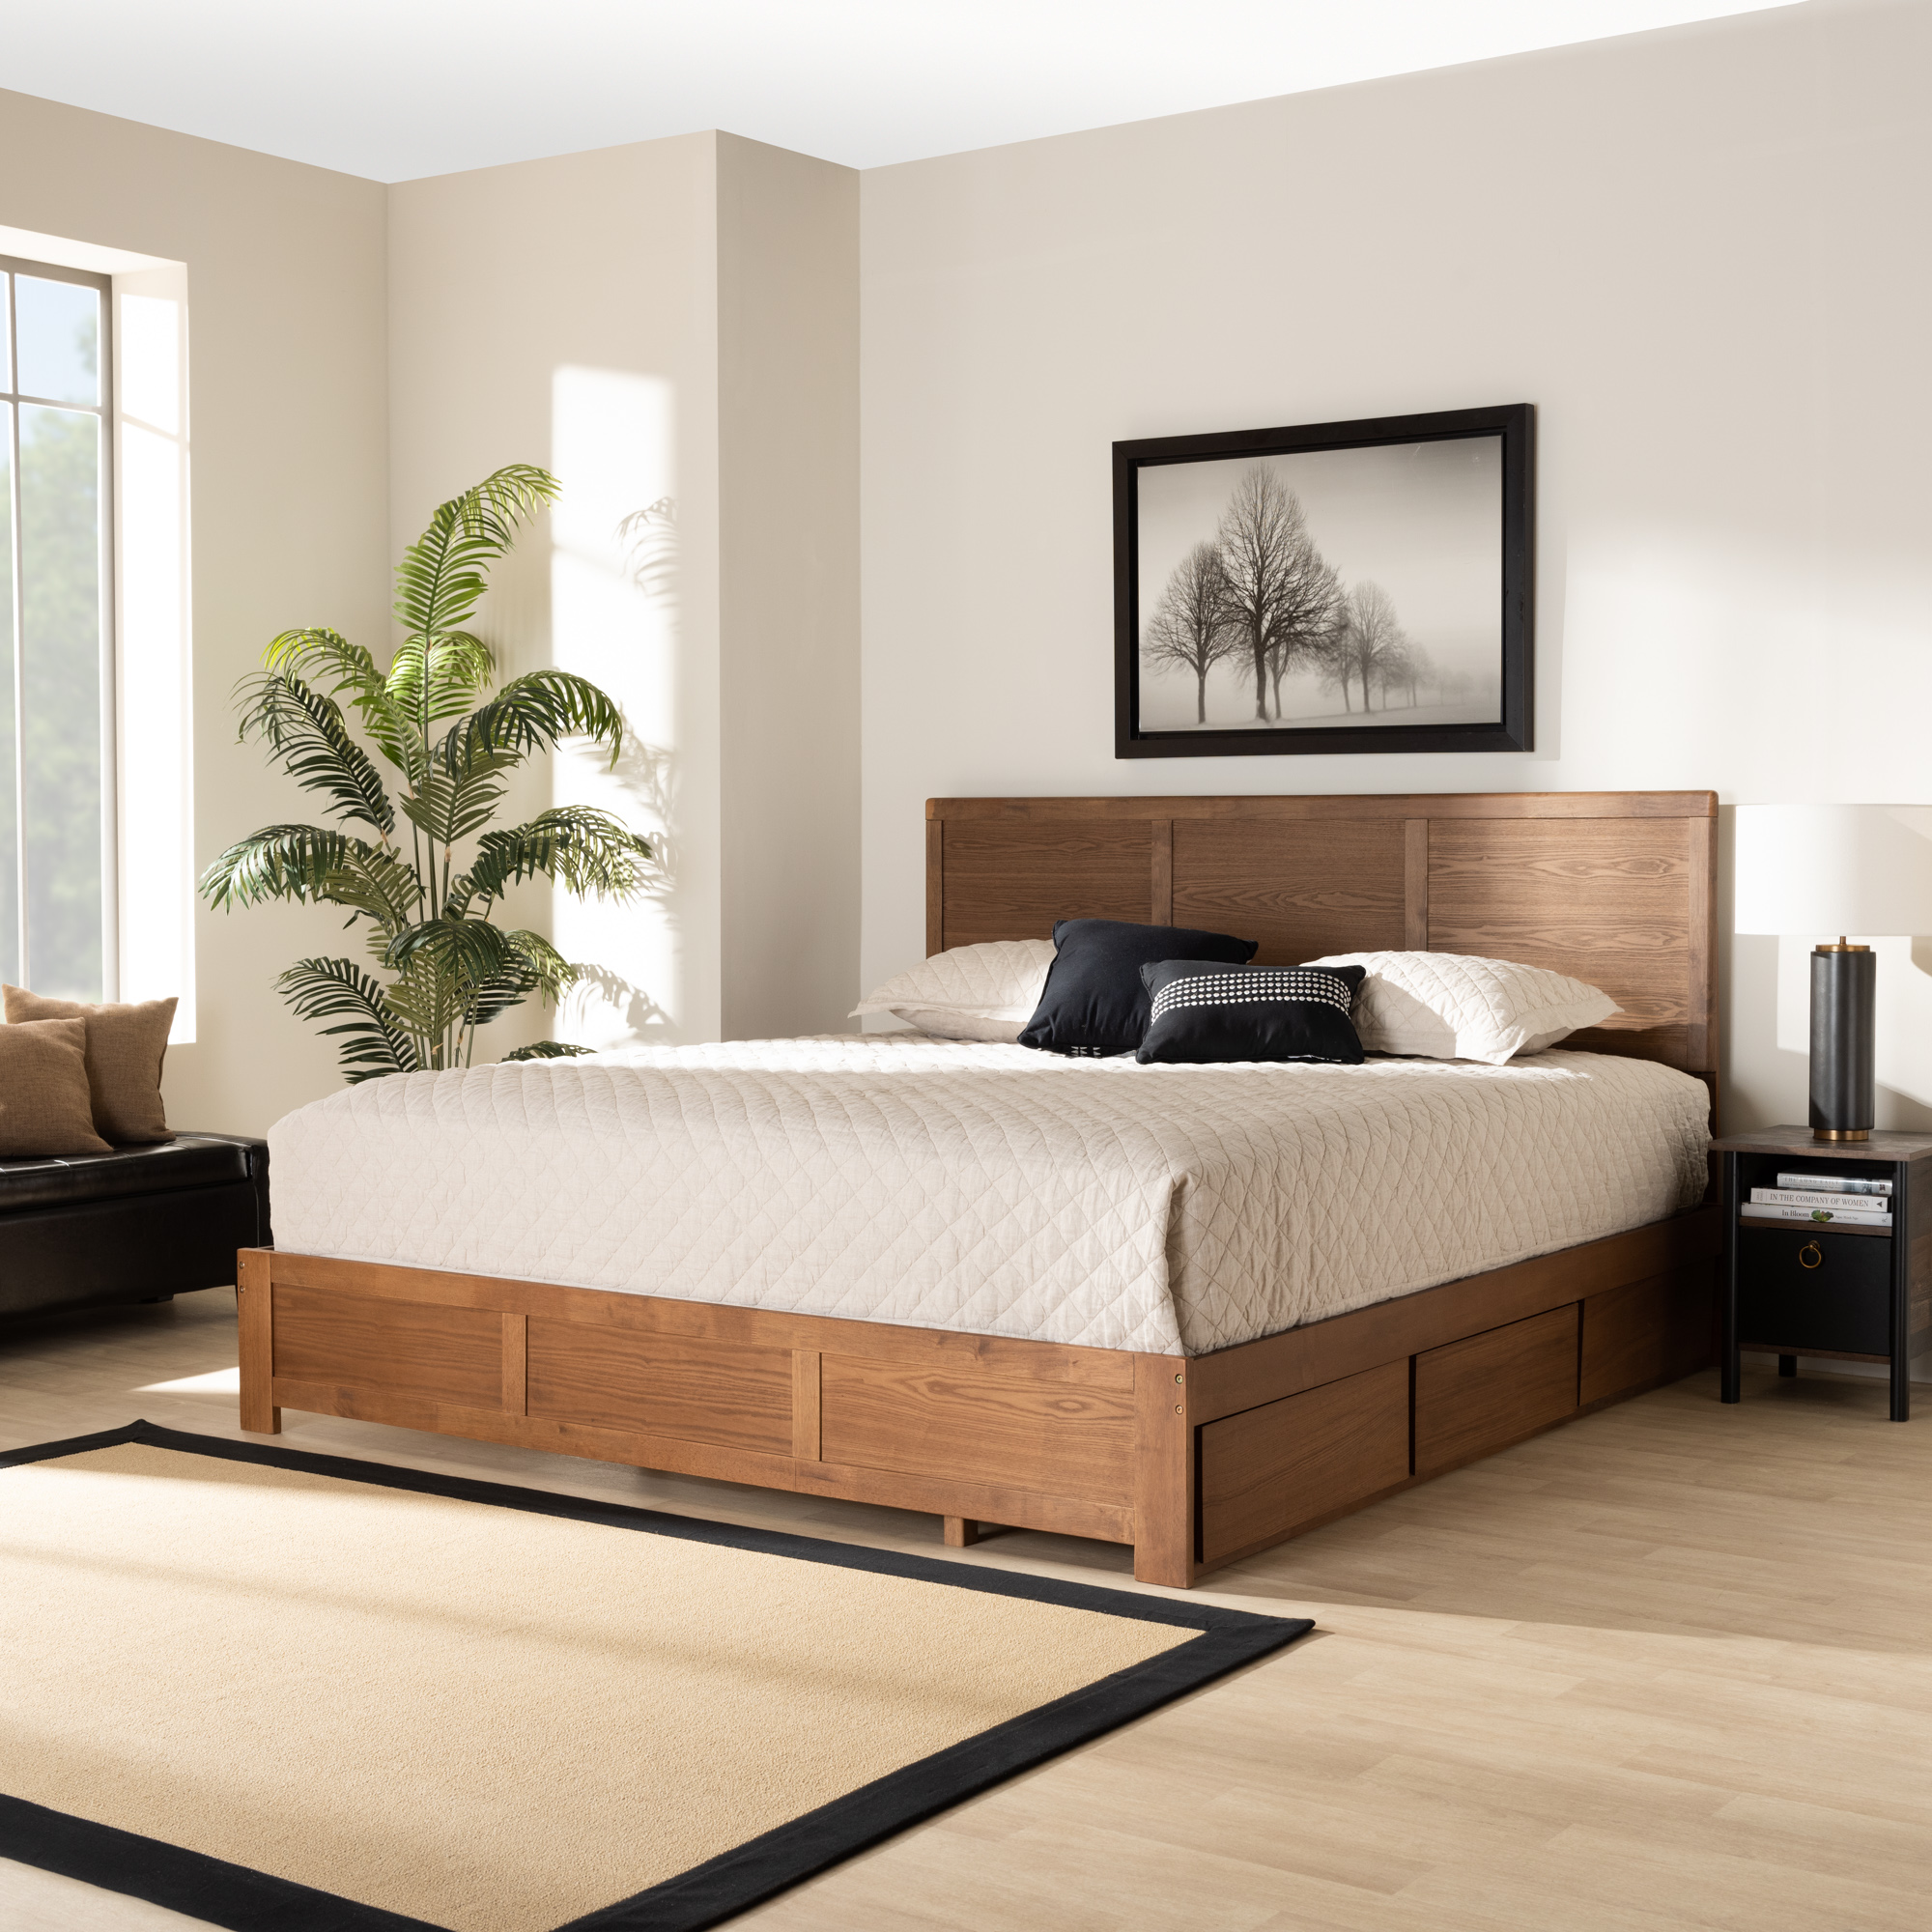 Baxton Studio Aras Contemporary/Modern Wood Storage Platform Bed, King, Ash Walnut - image 1 of 13